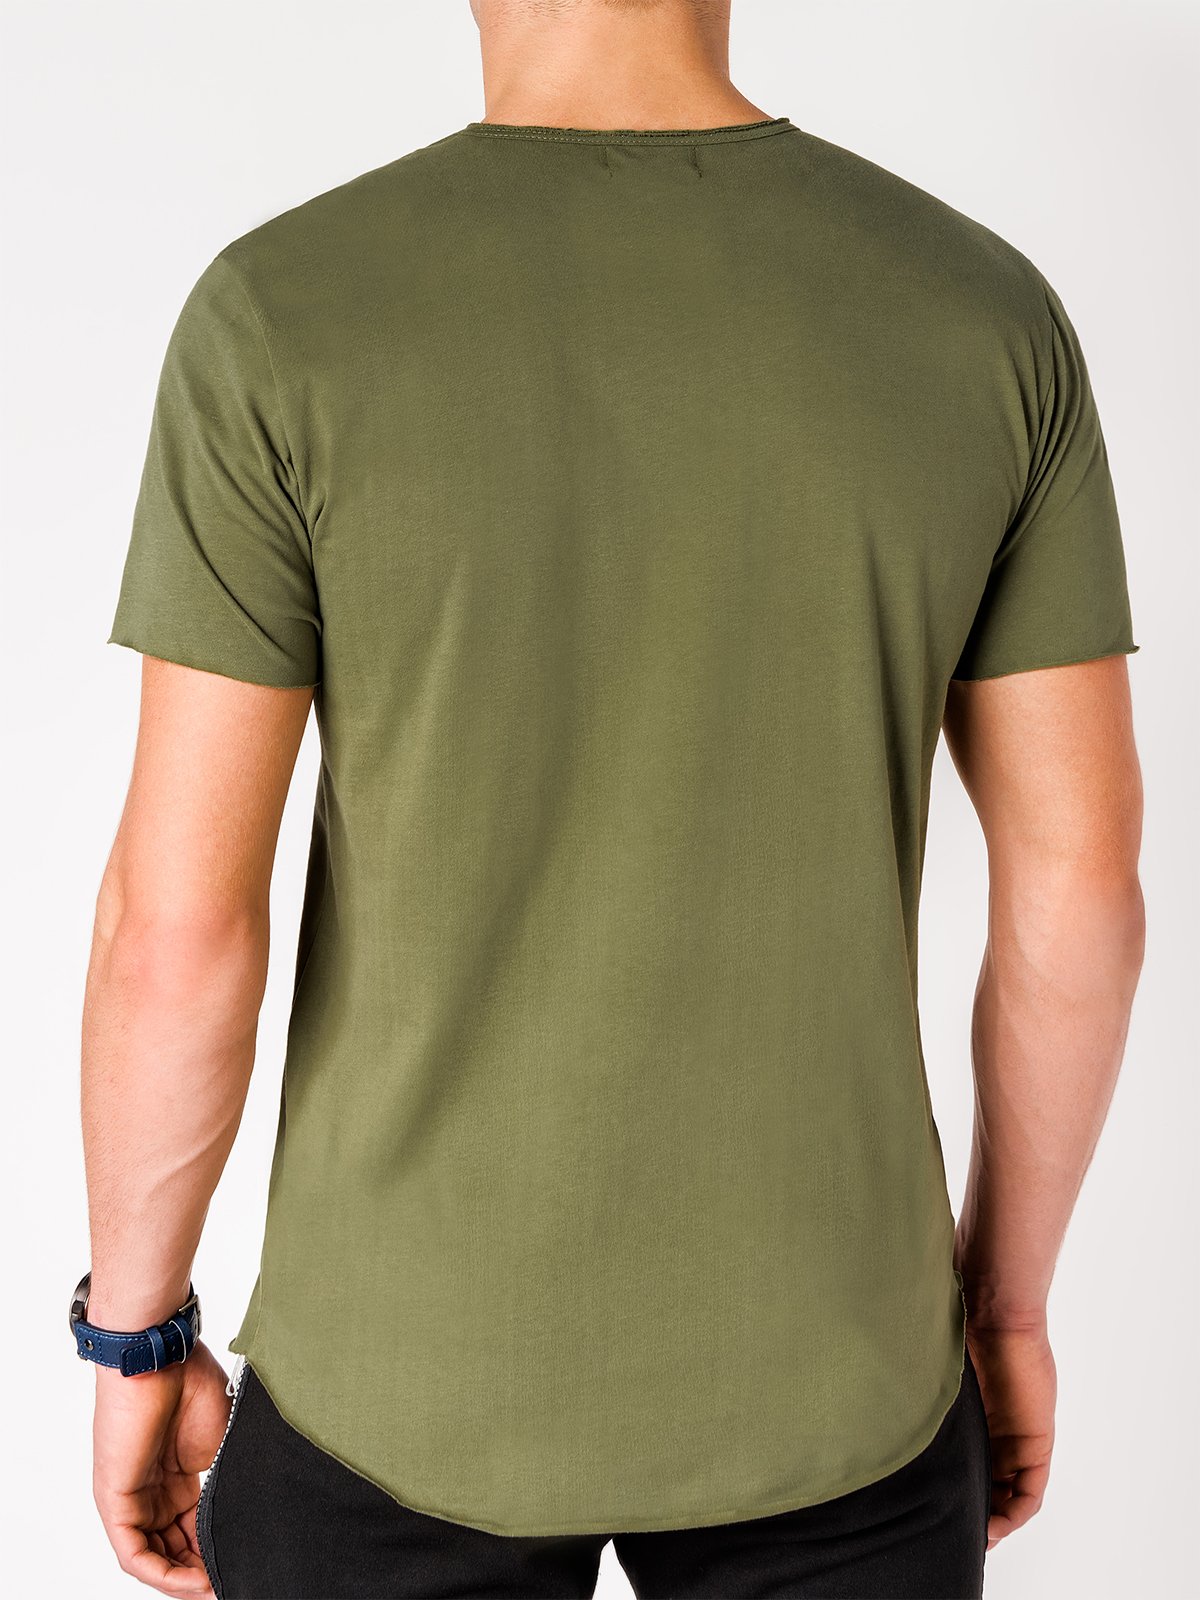 Men's printed t-shirt S957 - khaki | MODONE wholesale - Clothing For Men